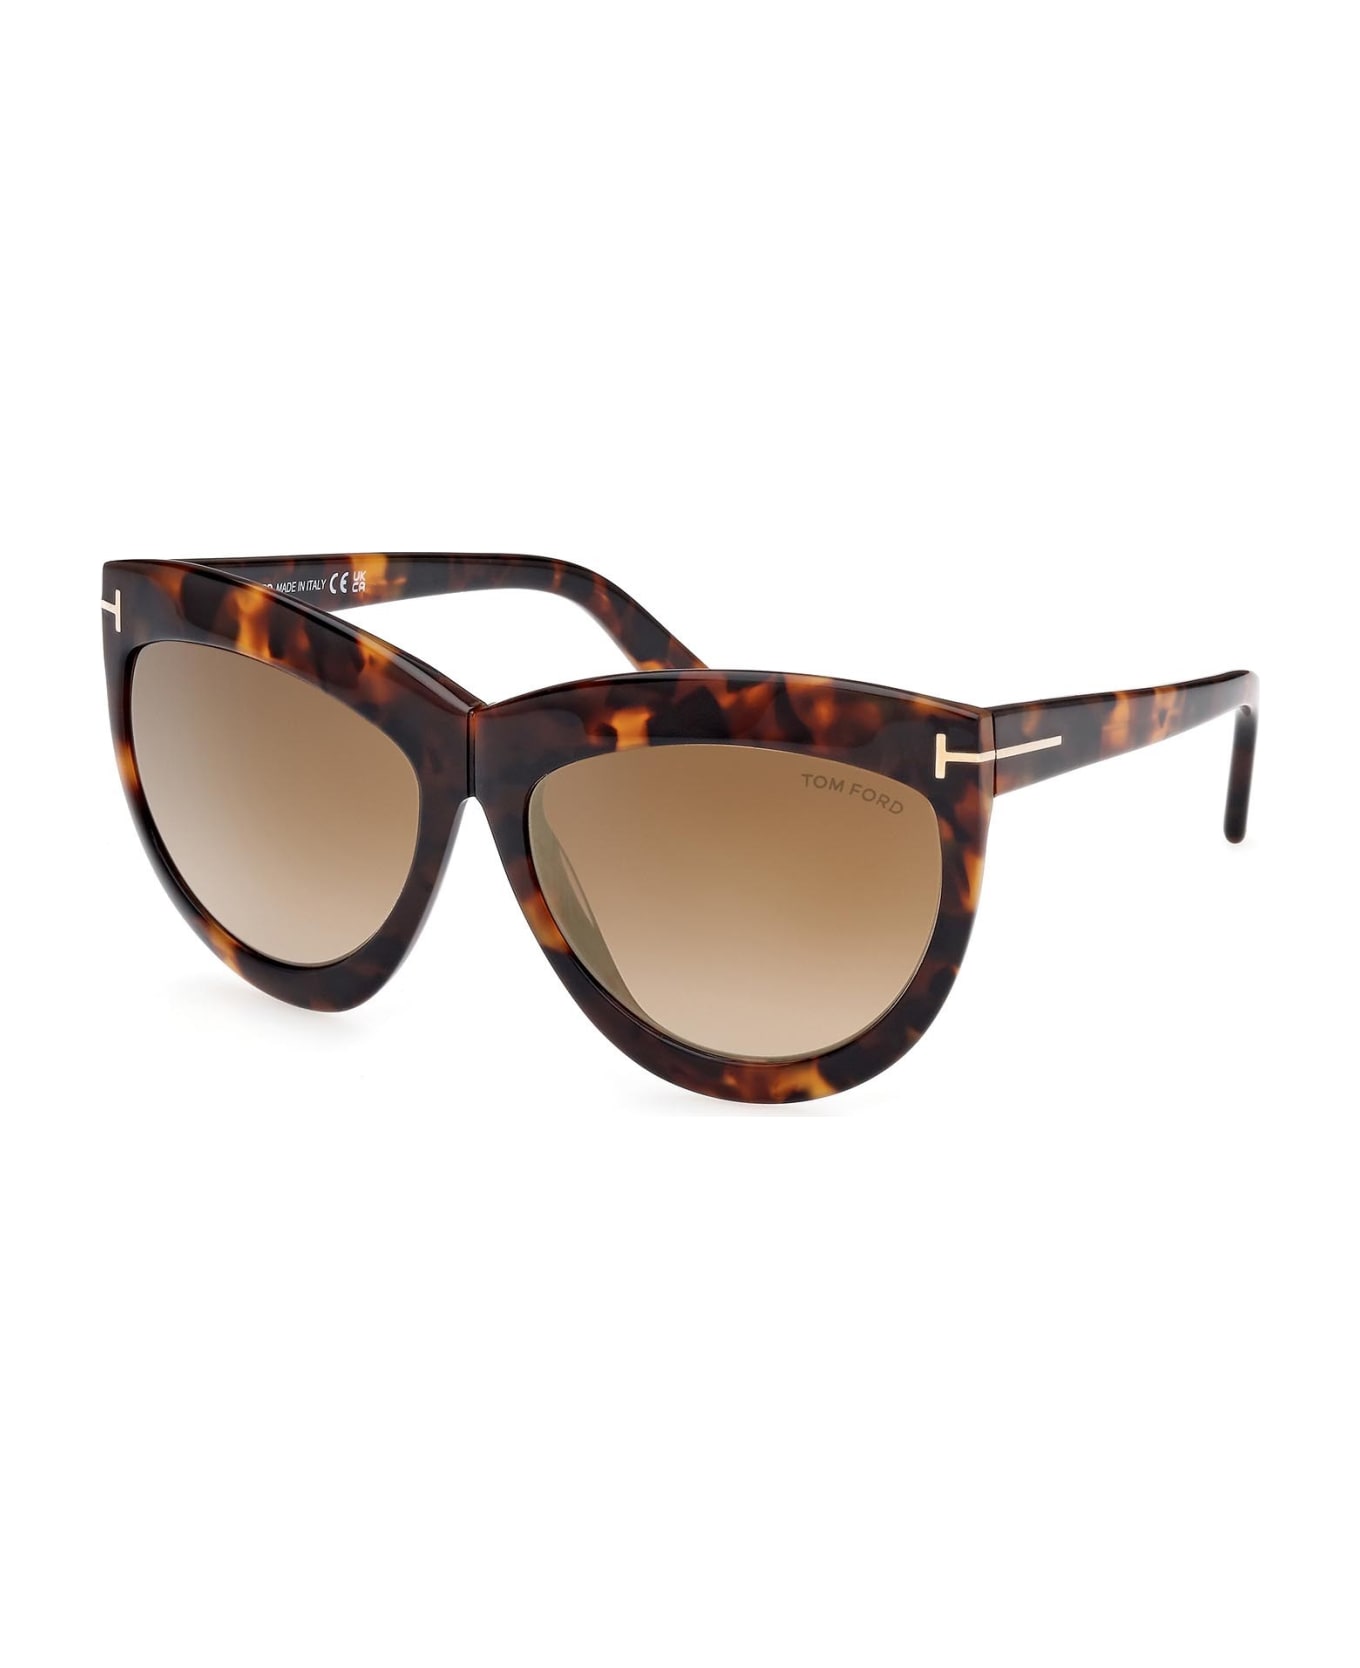 Tom Ford Eyewear Sunglasses - Havana/Marrone sfumato